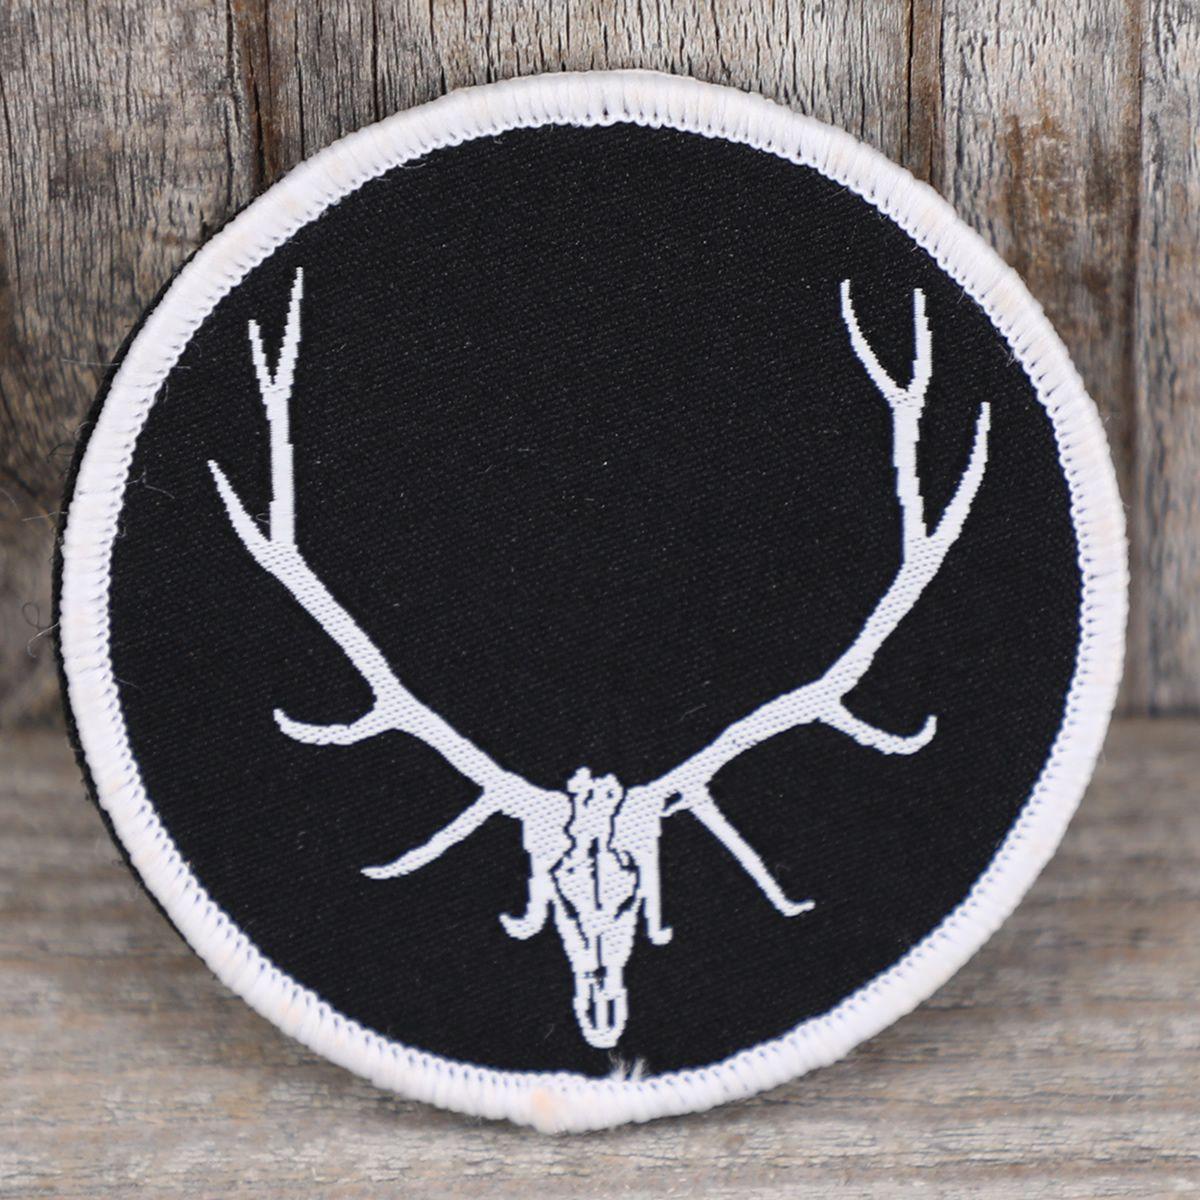 Black and White Bullseye Logo - Silvies Unit. Elk Antlers Black White Bullseye Patch